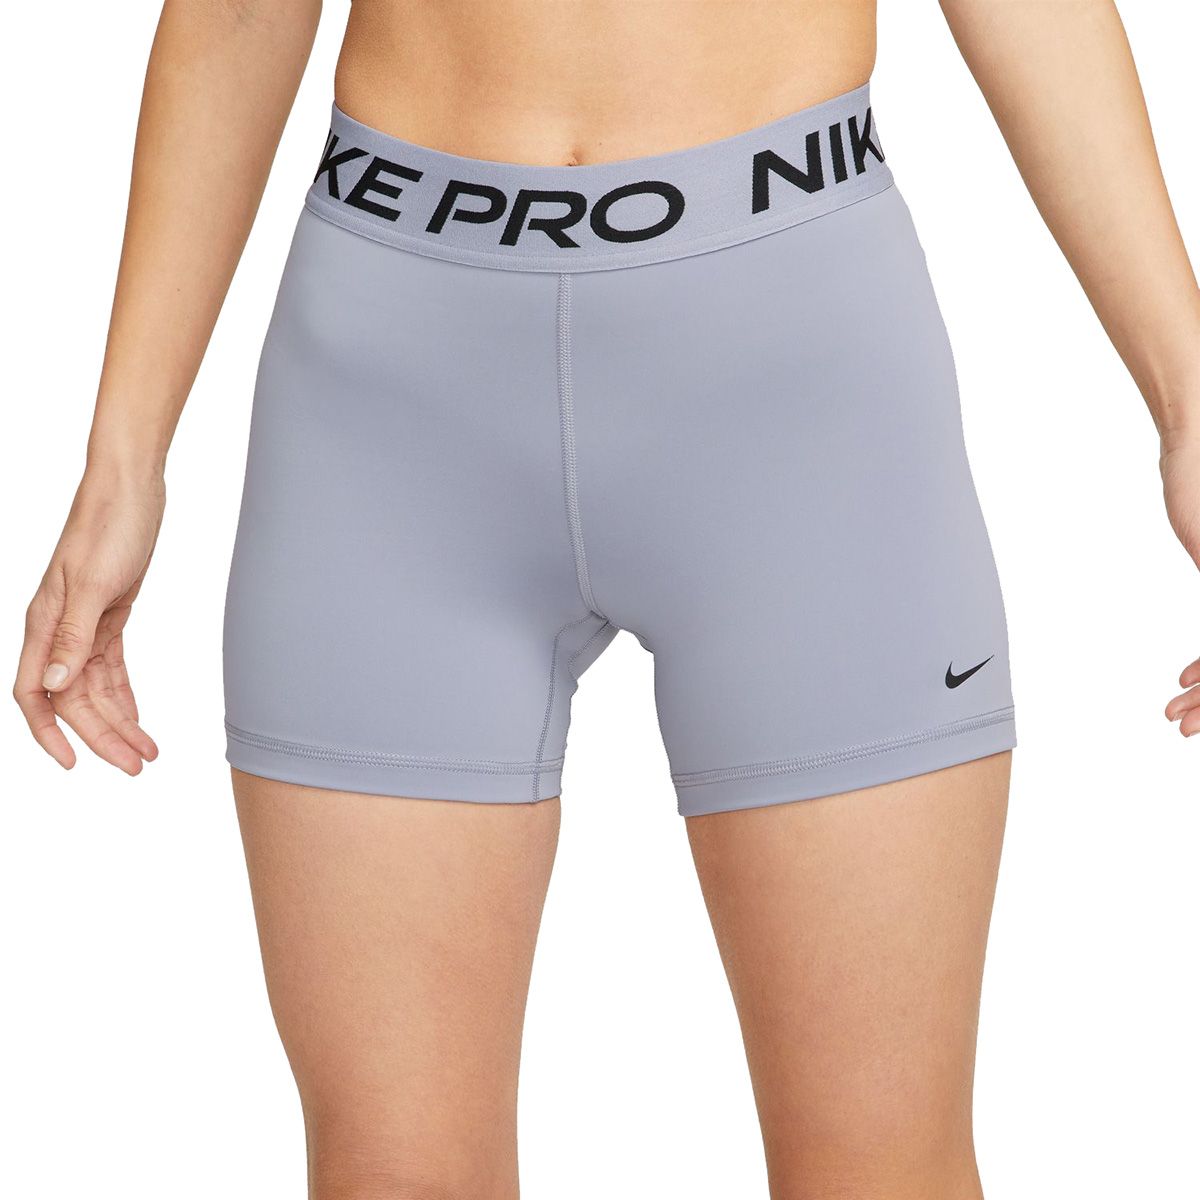 Nike Pro shorts. Шорты компрессионные w NP 365 short 5in. Nike Pro шорты. Шорт 365